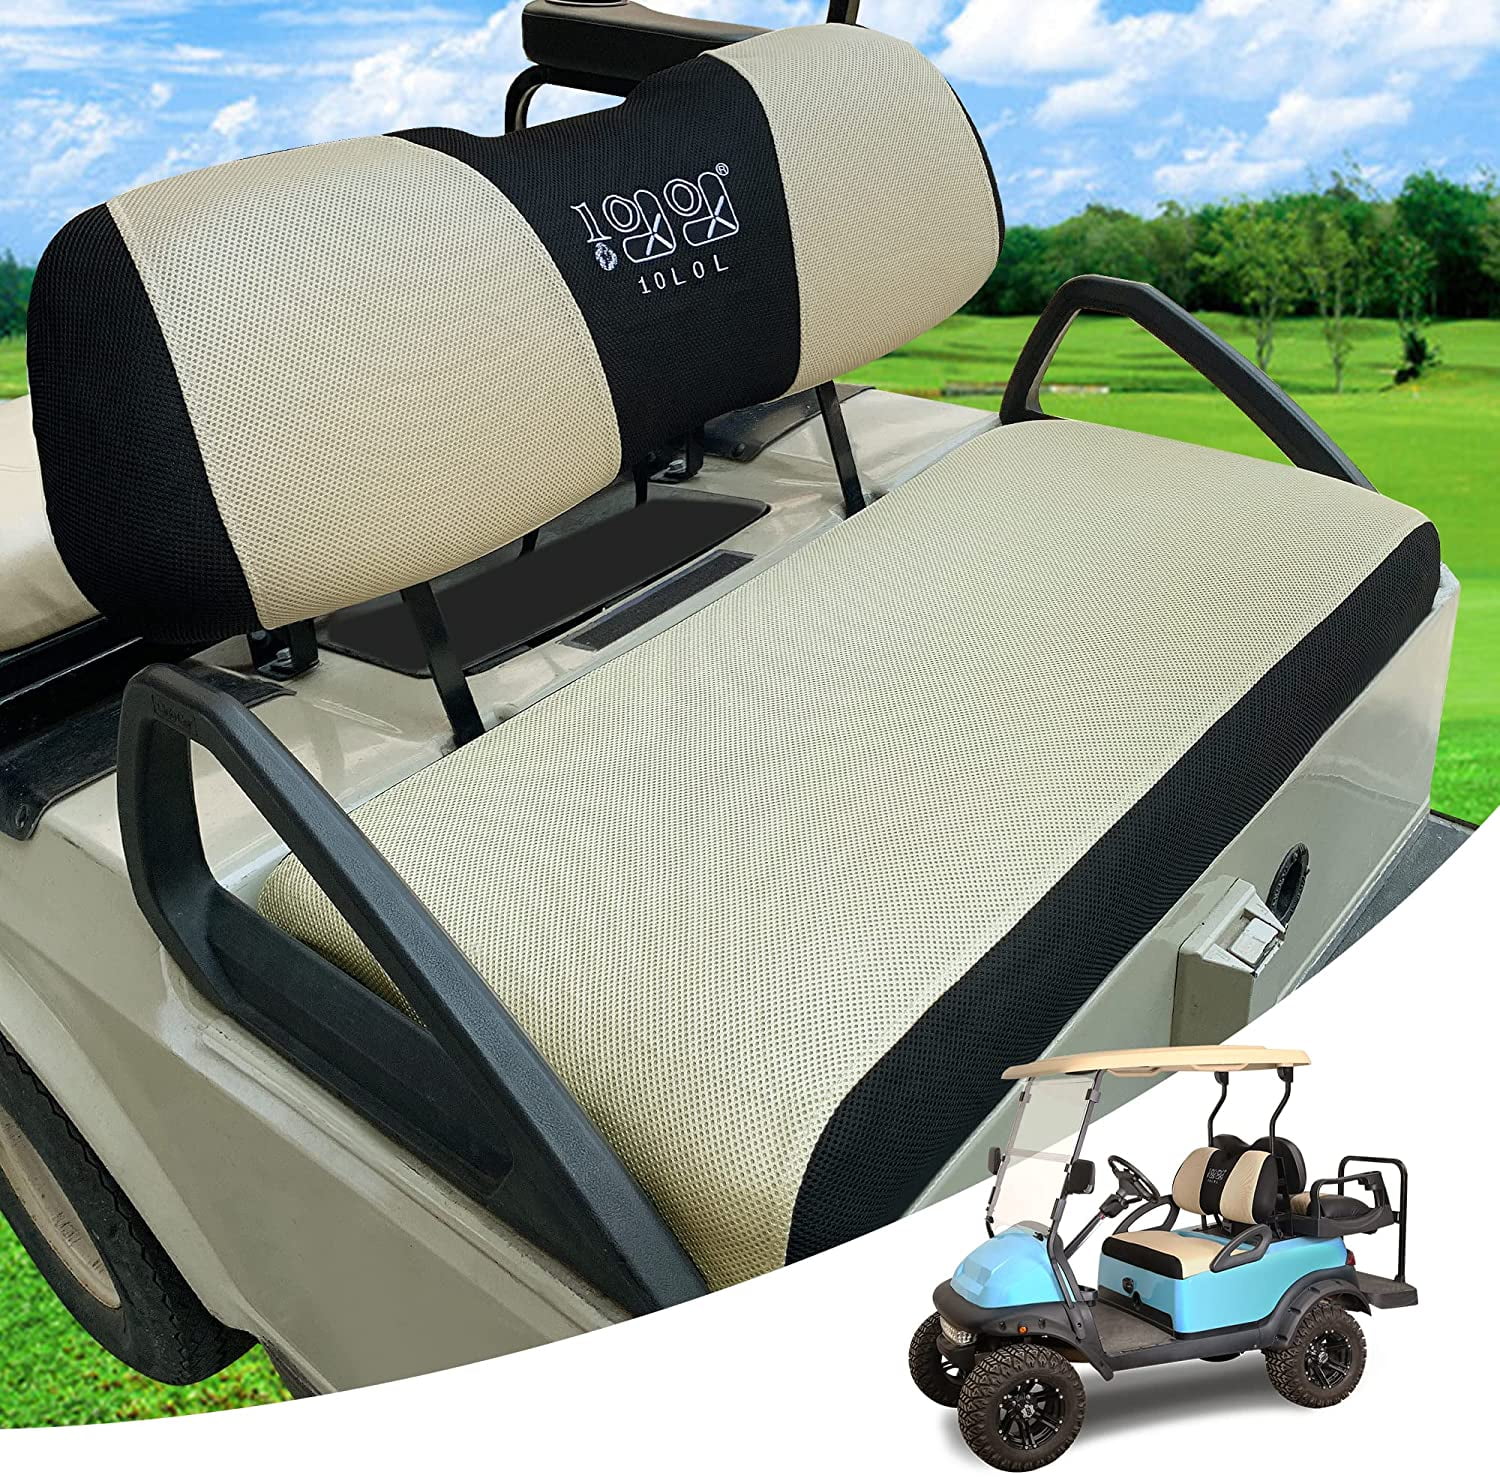 10L0L Golf Cart Seat Cover for Yamaha & Club Car DS Precedent 2 Passenger,  Mesh Golf Cart Cover Protector ,Beige Black 